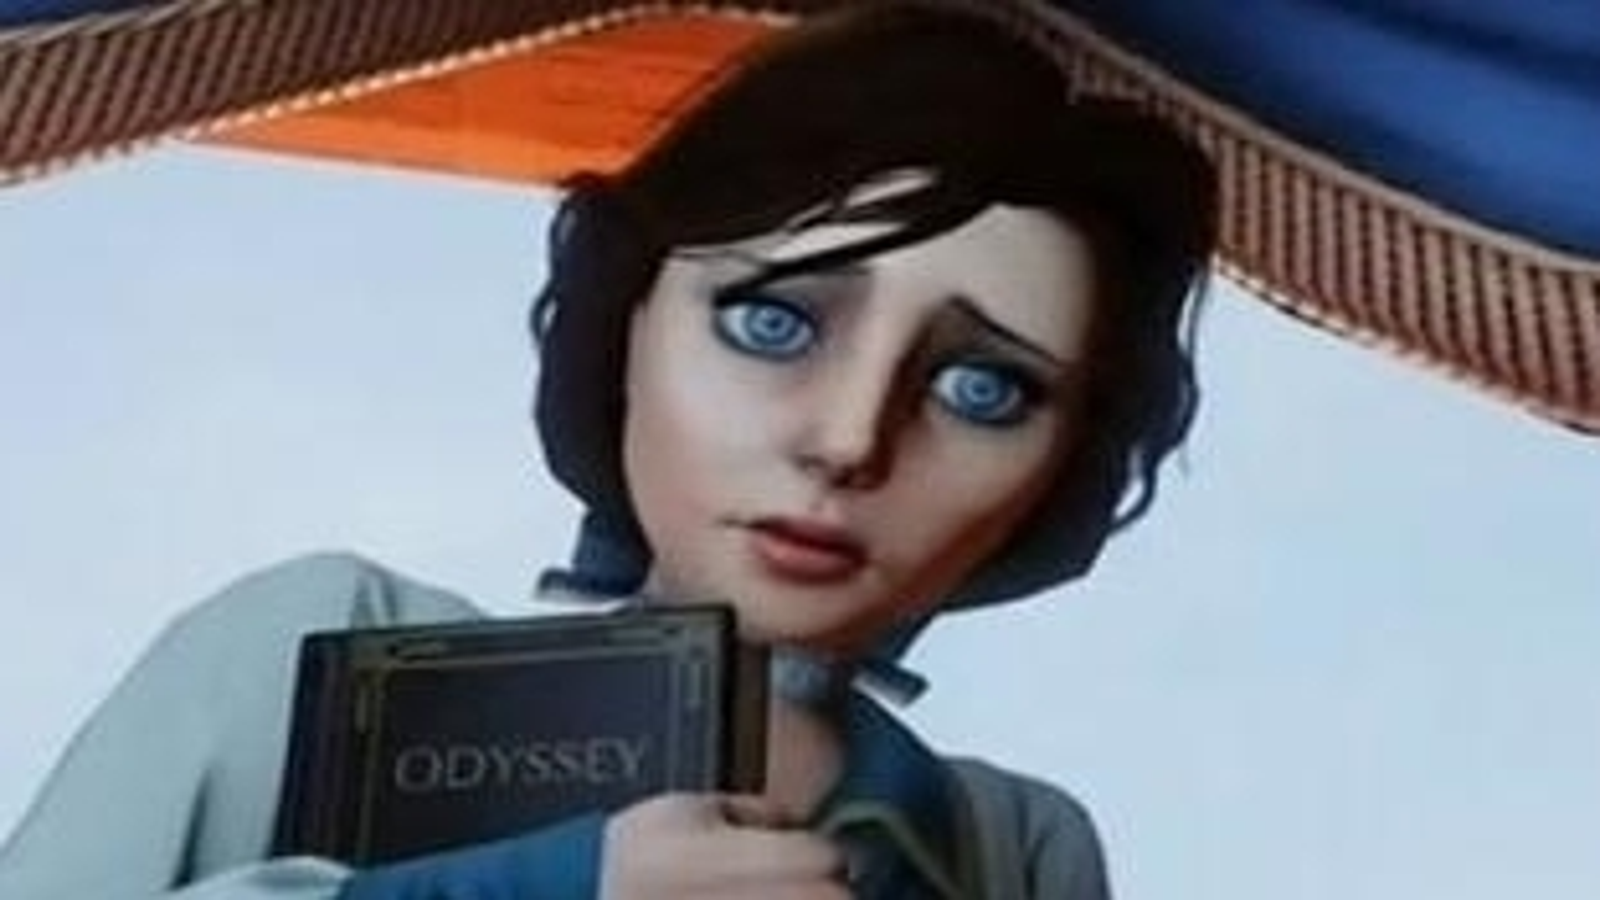 BioShock Infinite - Characters and Voice Actors 